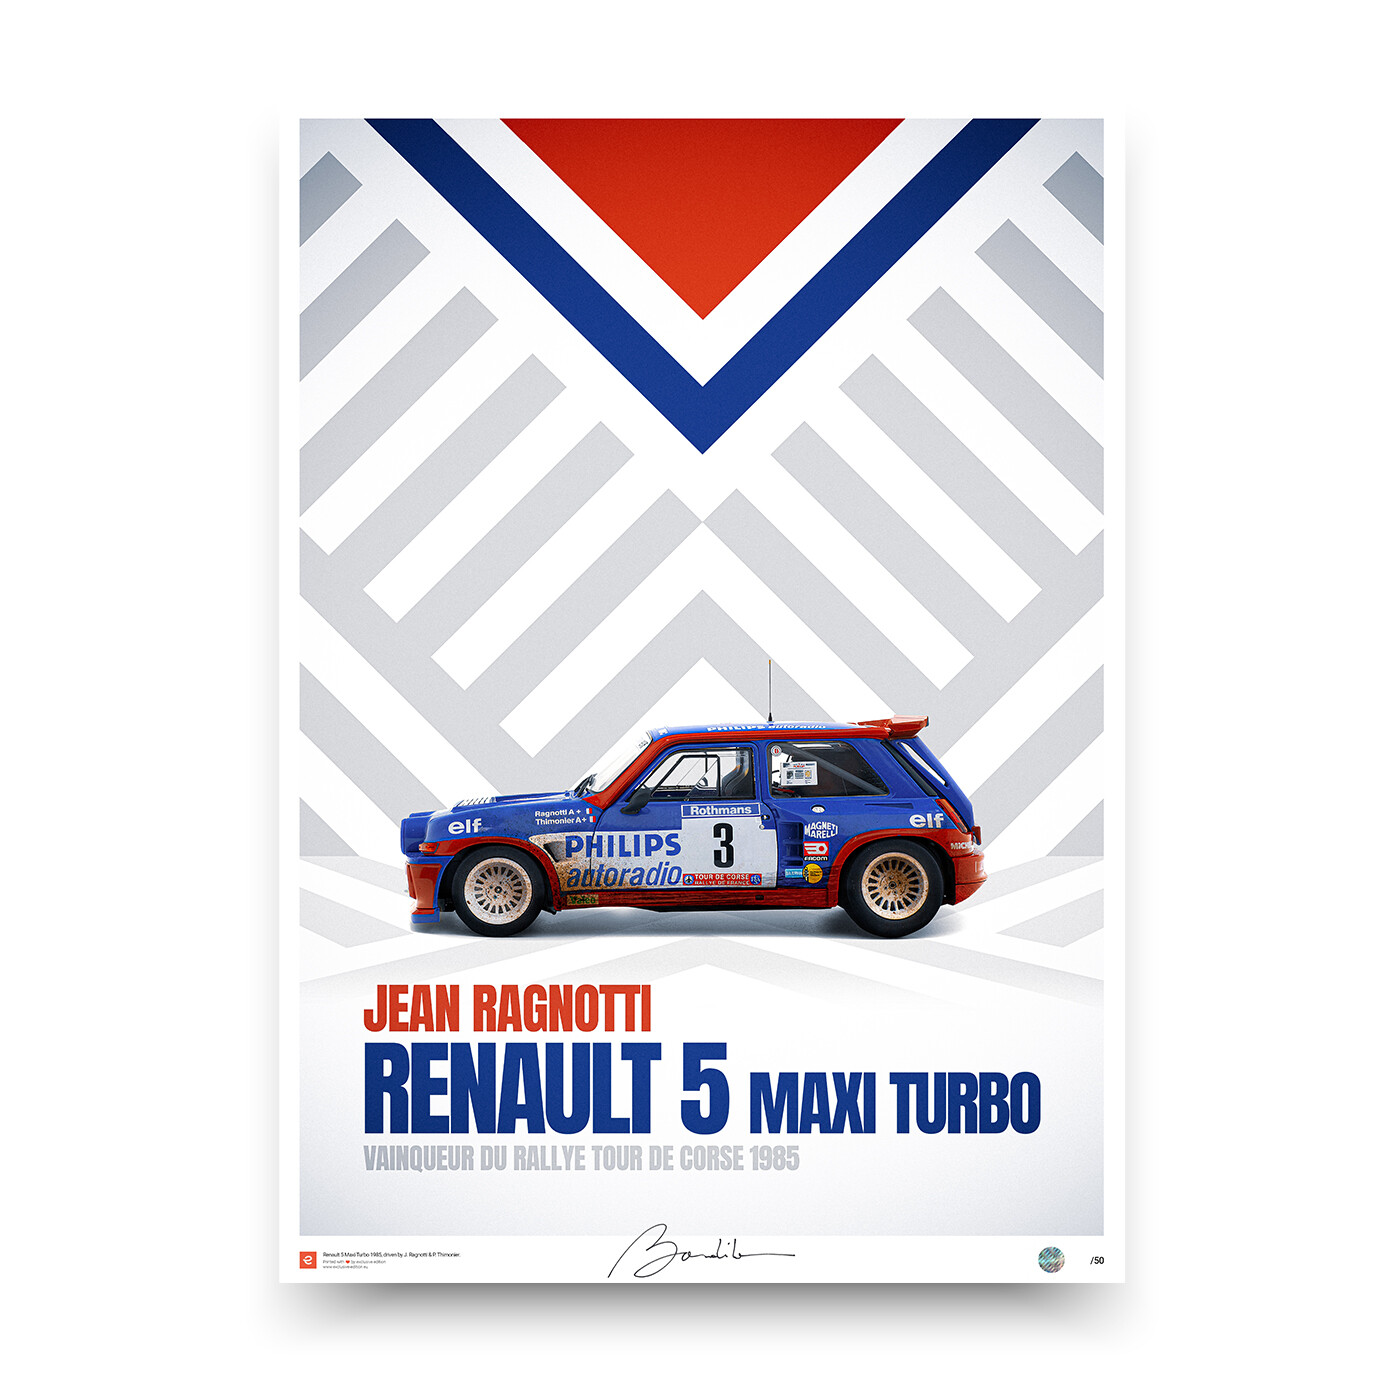 Renault 5 Turbo - Ragnotti - Rallye Tour de corse 1985. Limited edition